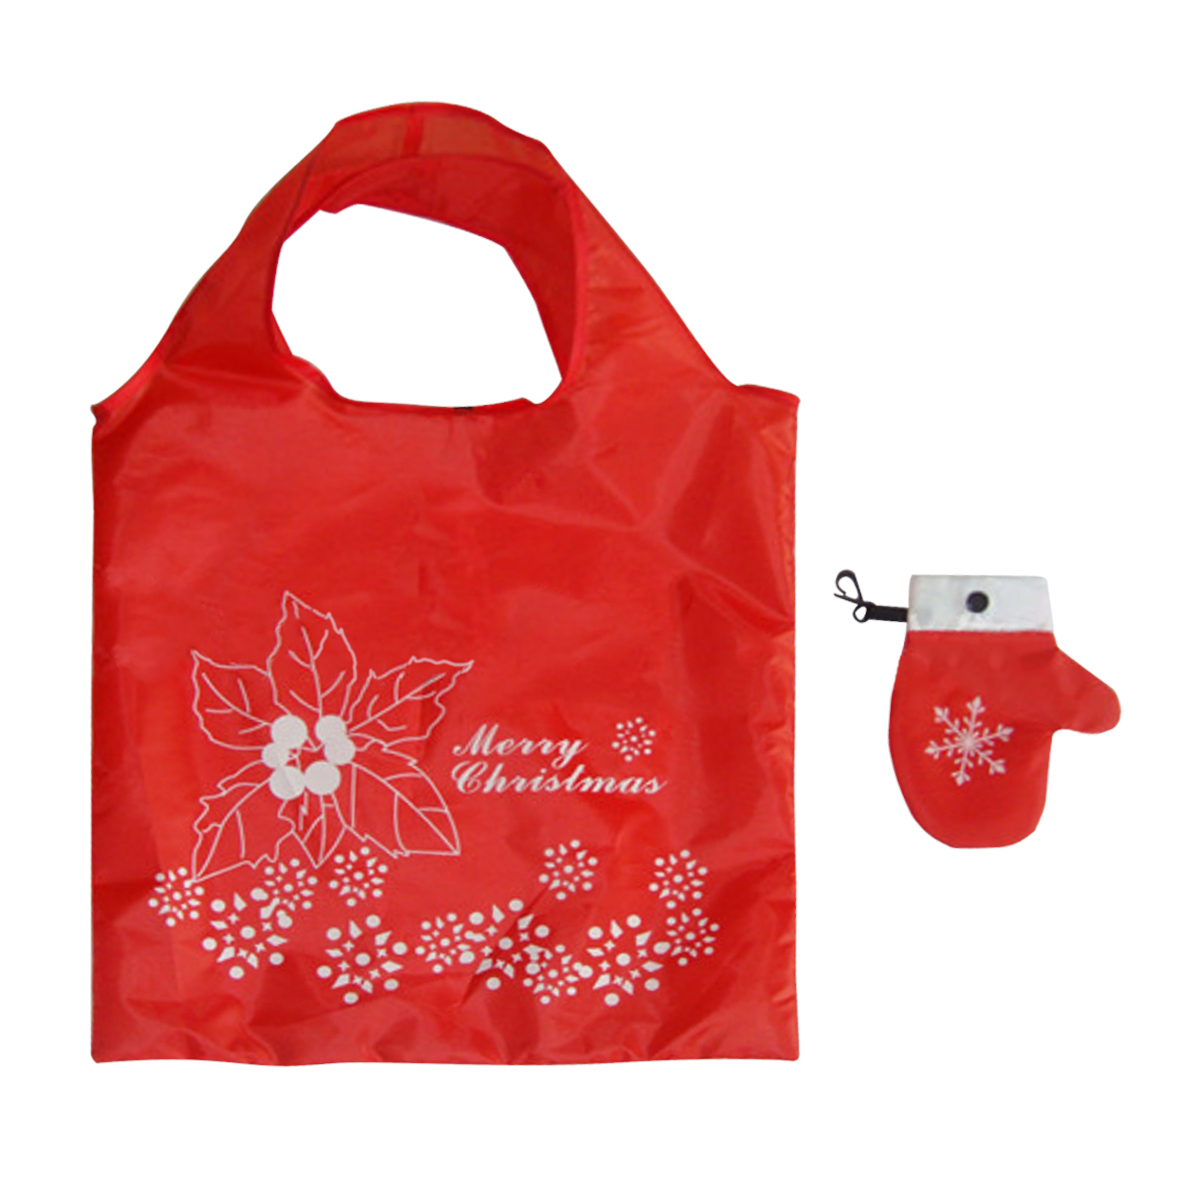 Customised Christmas Foldable Shopping Bag